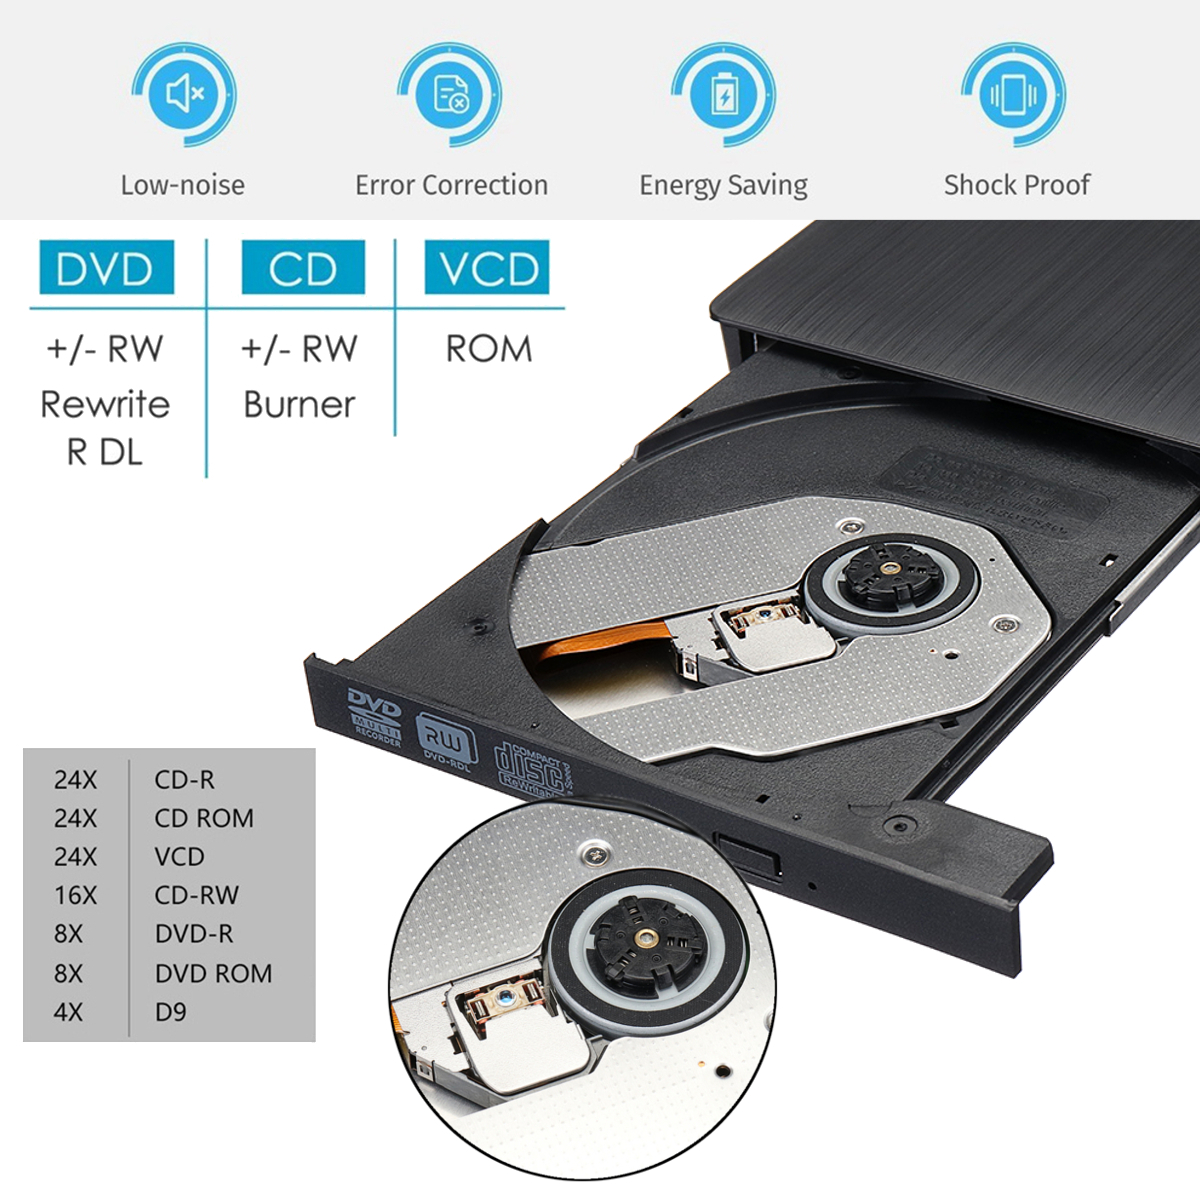 External-USB-20-DVD-RW-CD-Writer-Slim-Optical-Drive-Burner-Reader-Player-For-PC-Laptop-Business-Offi-1535879-3